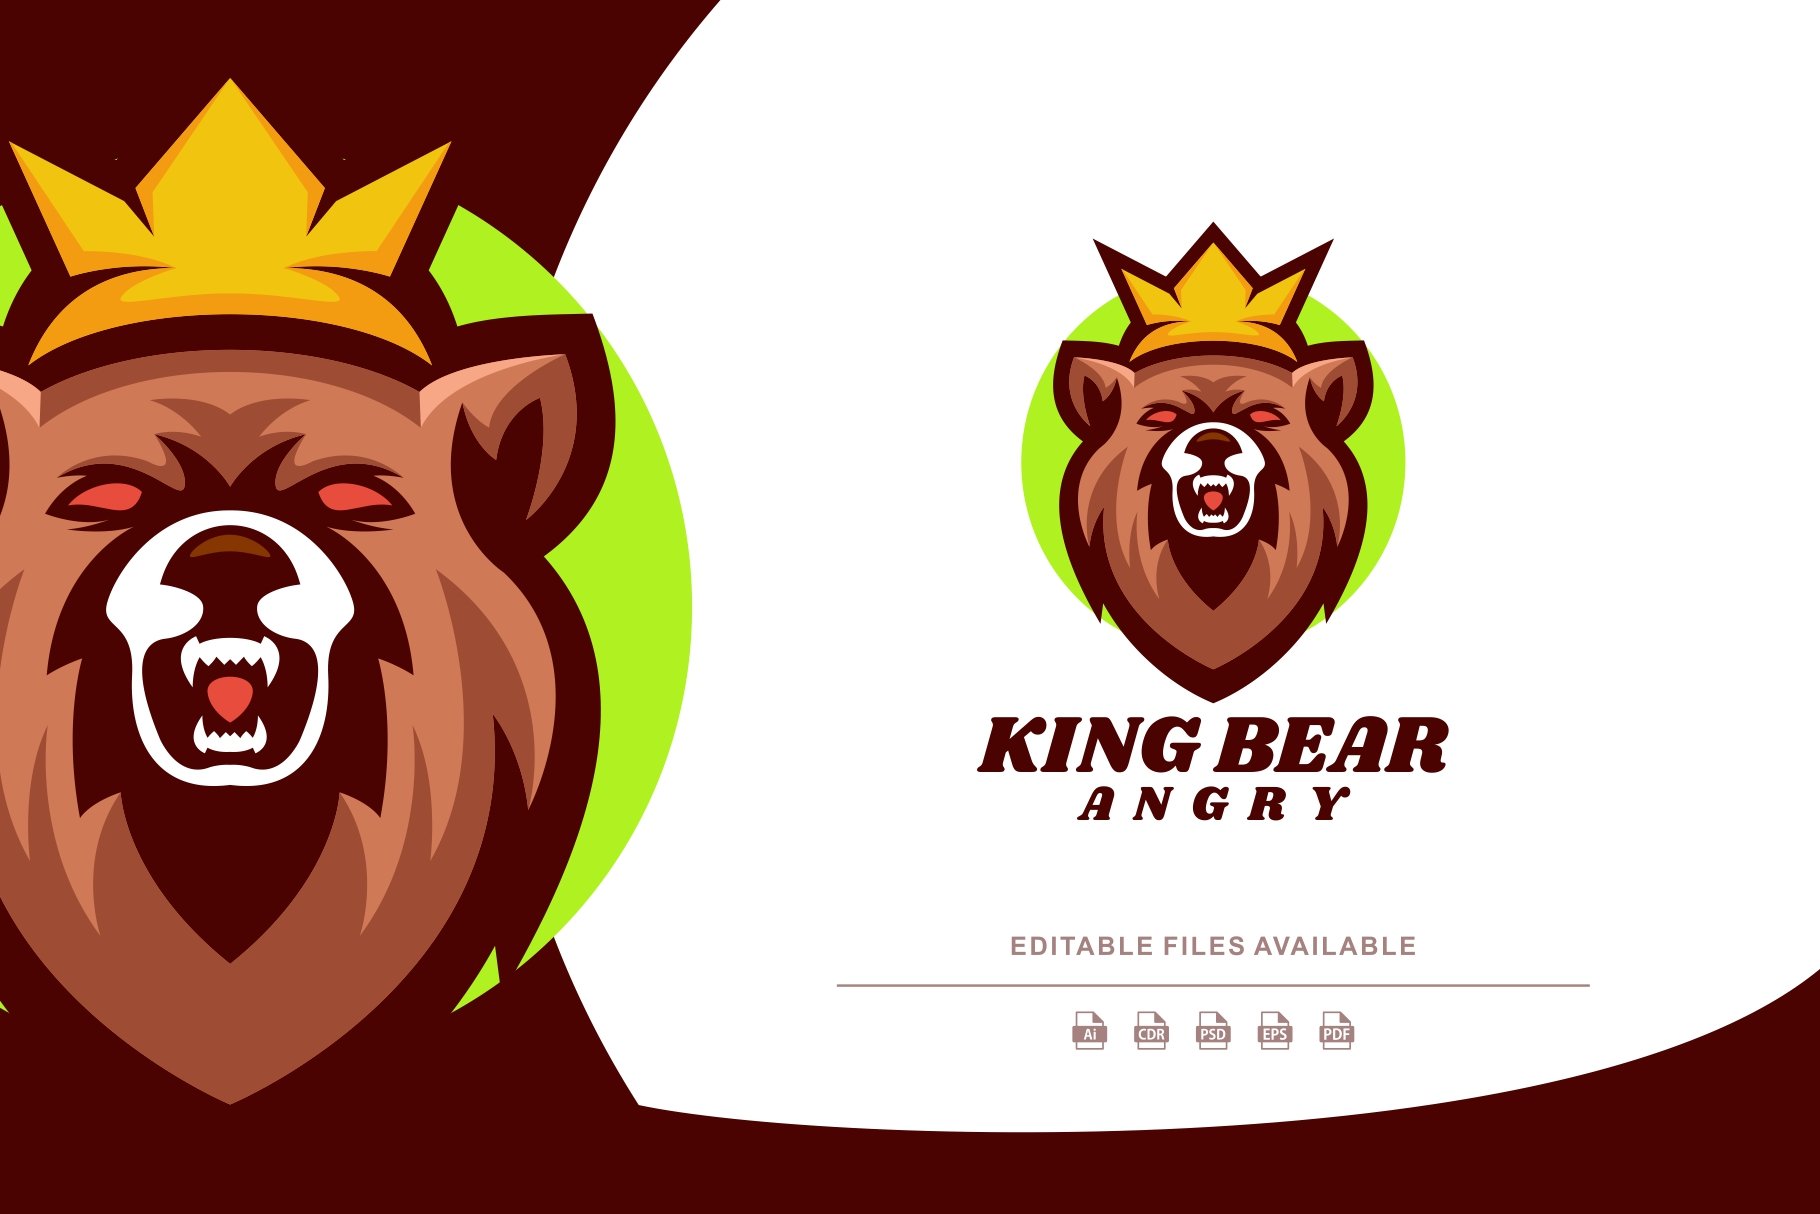 King Bear Simple Mascot Logo cover image.